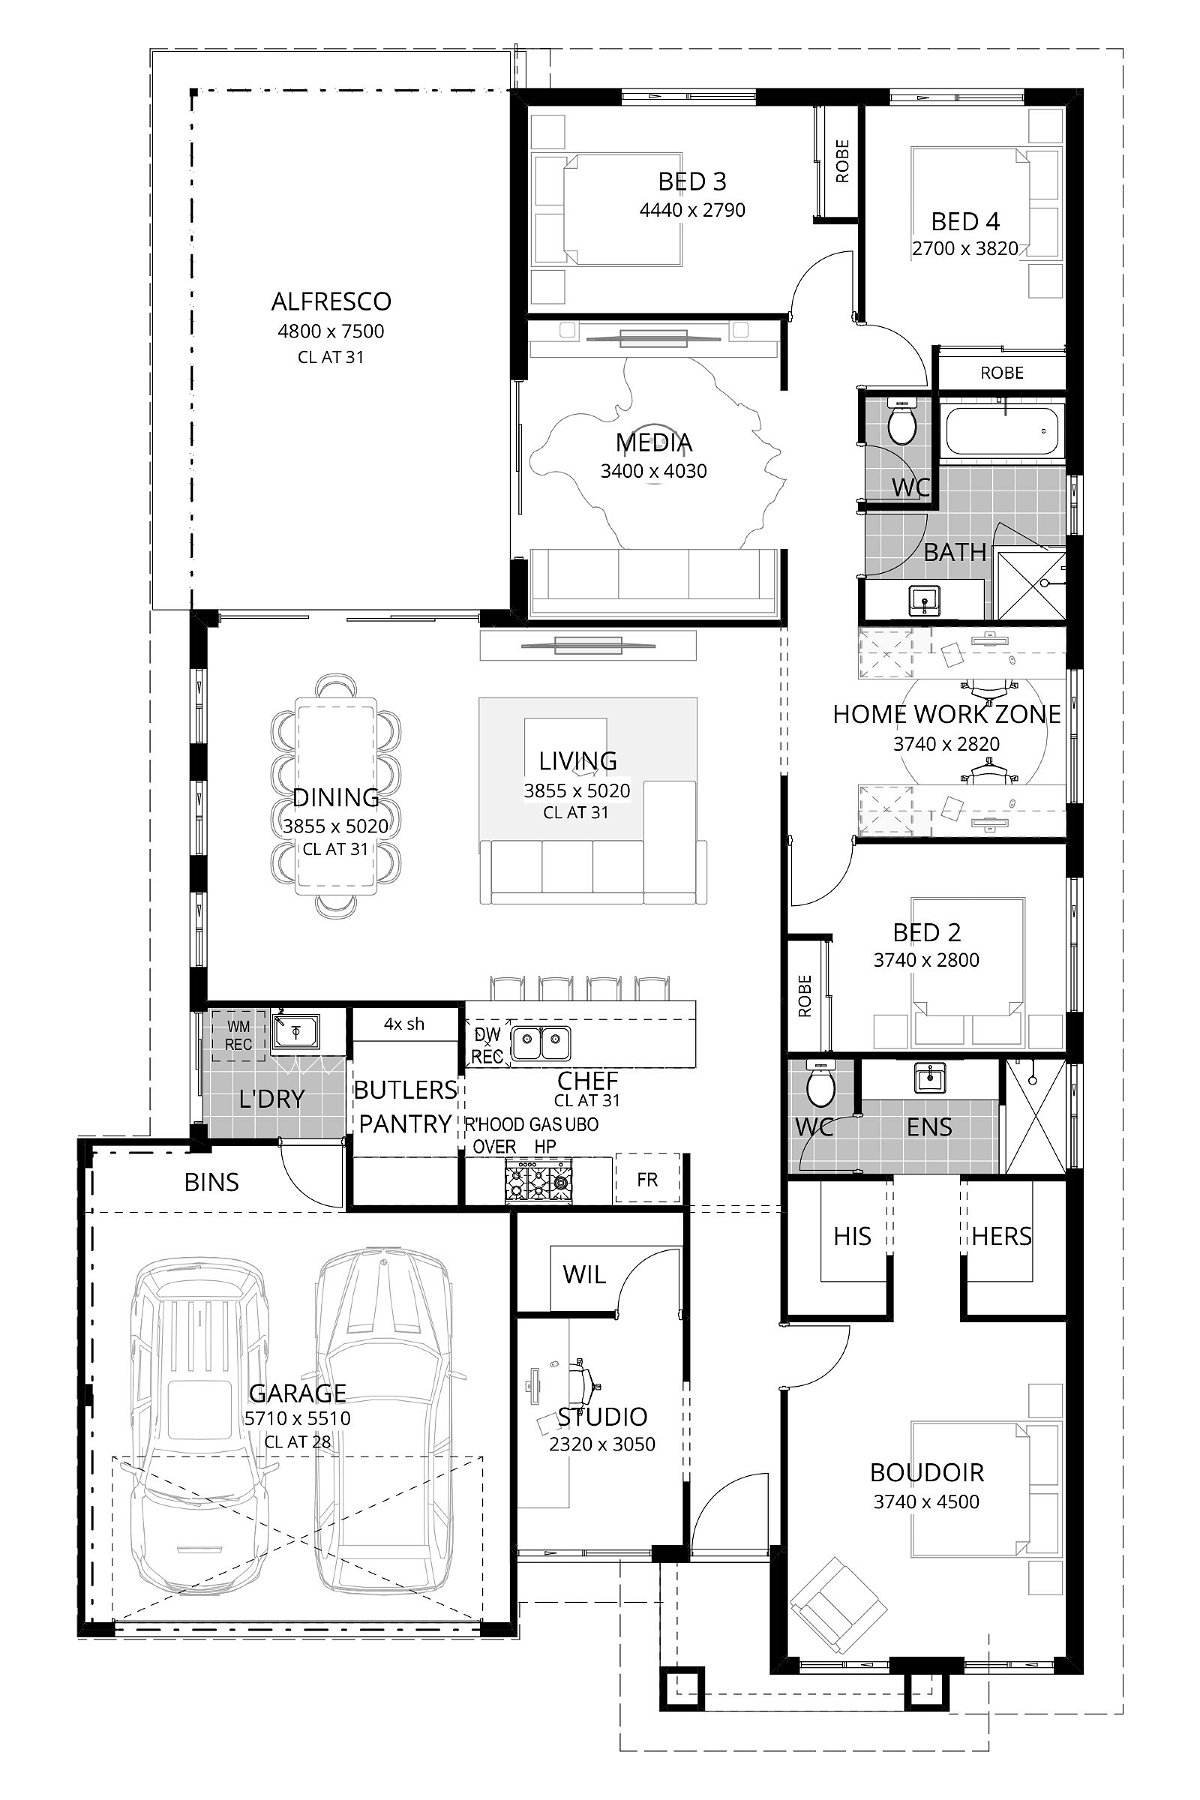 Residential Attitudes - Native Serenity - Floorplan - Native Serenity Floorplan Website